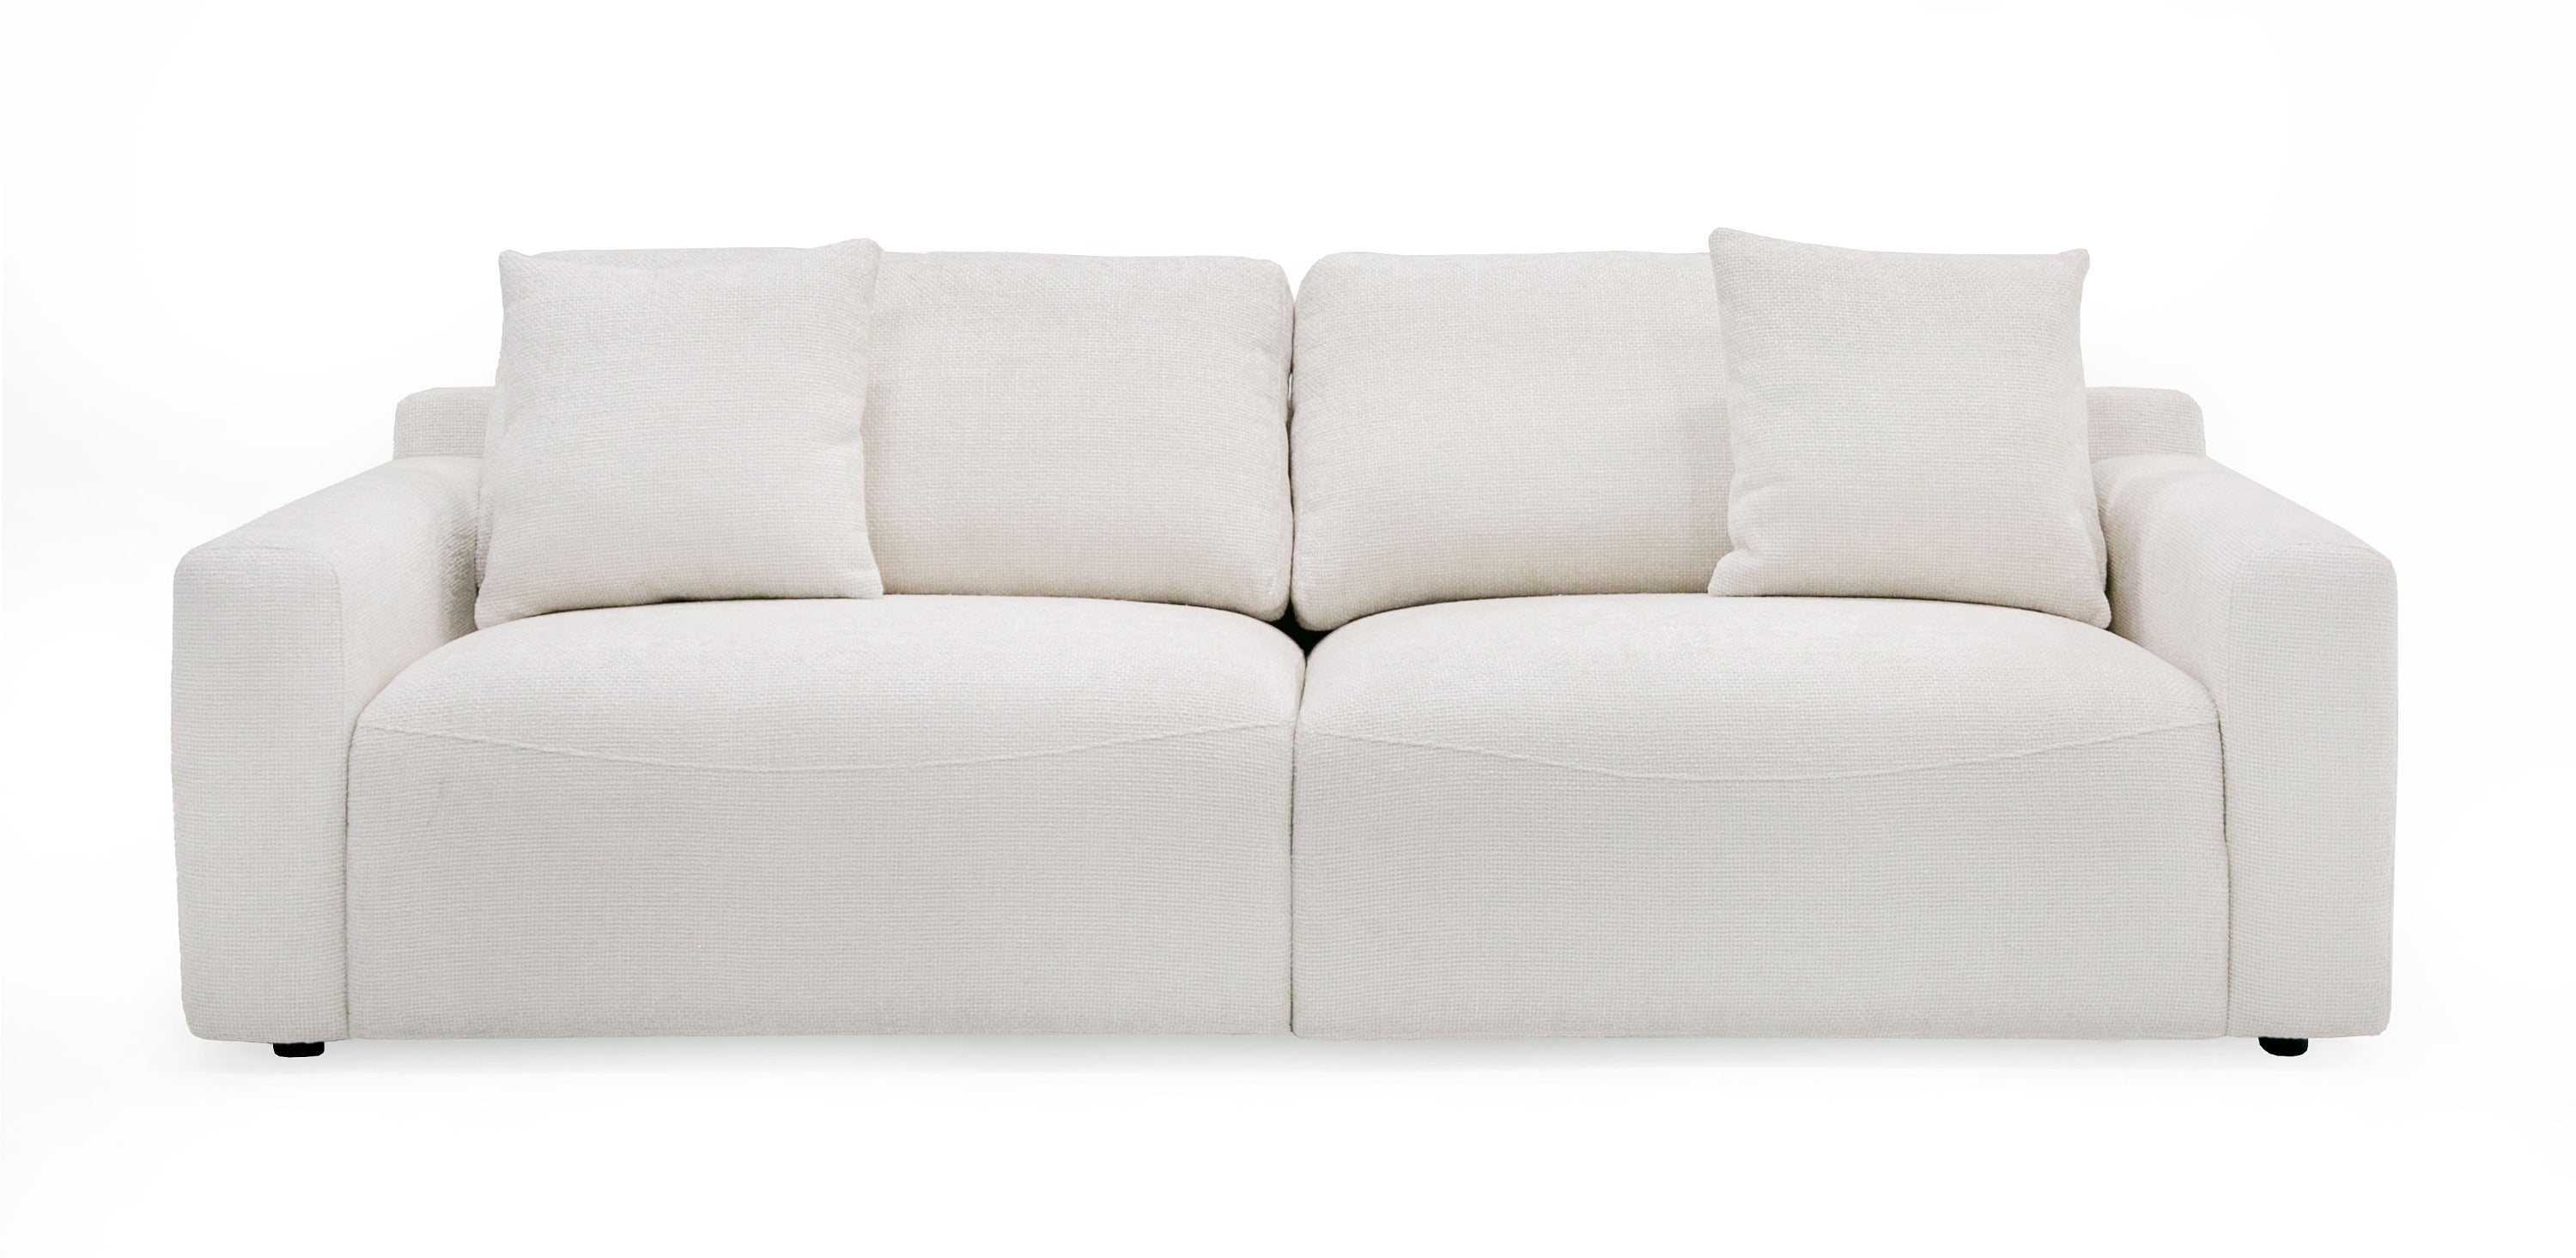 Vig Furniture Divani Casa Gloria - Modern White Fabric Sofa